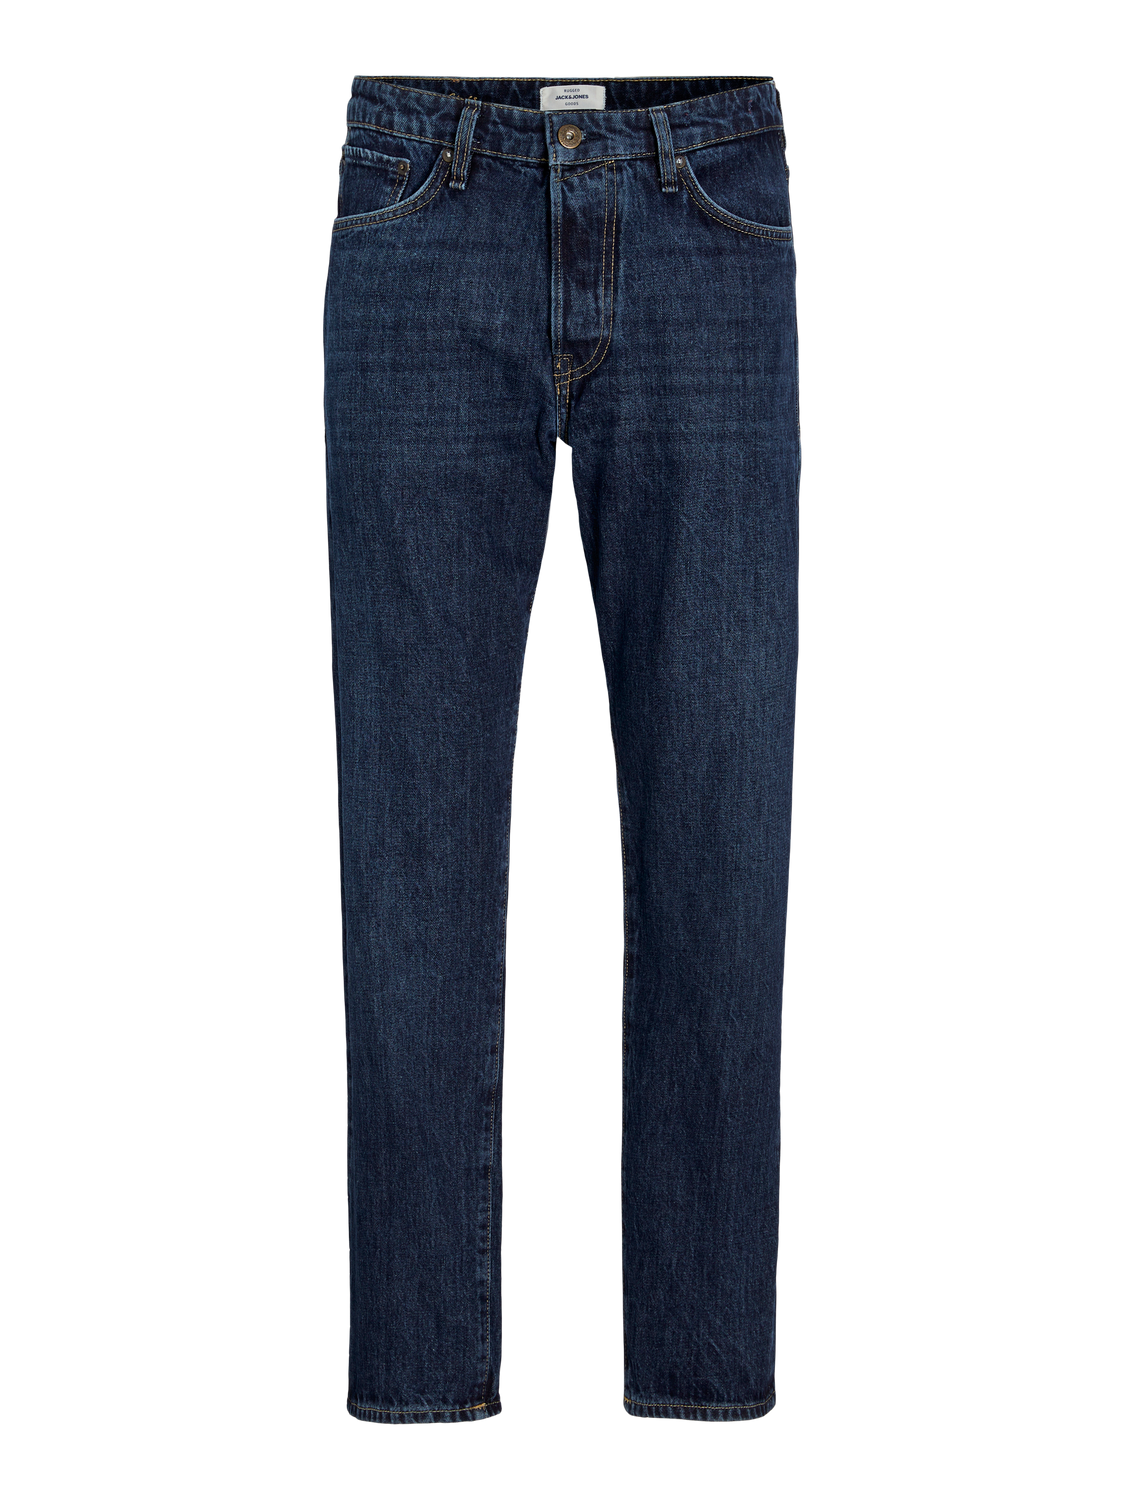 JJICHRIS JJCOOPER JOS 480 Relaxed Fit Jeans